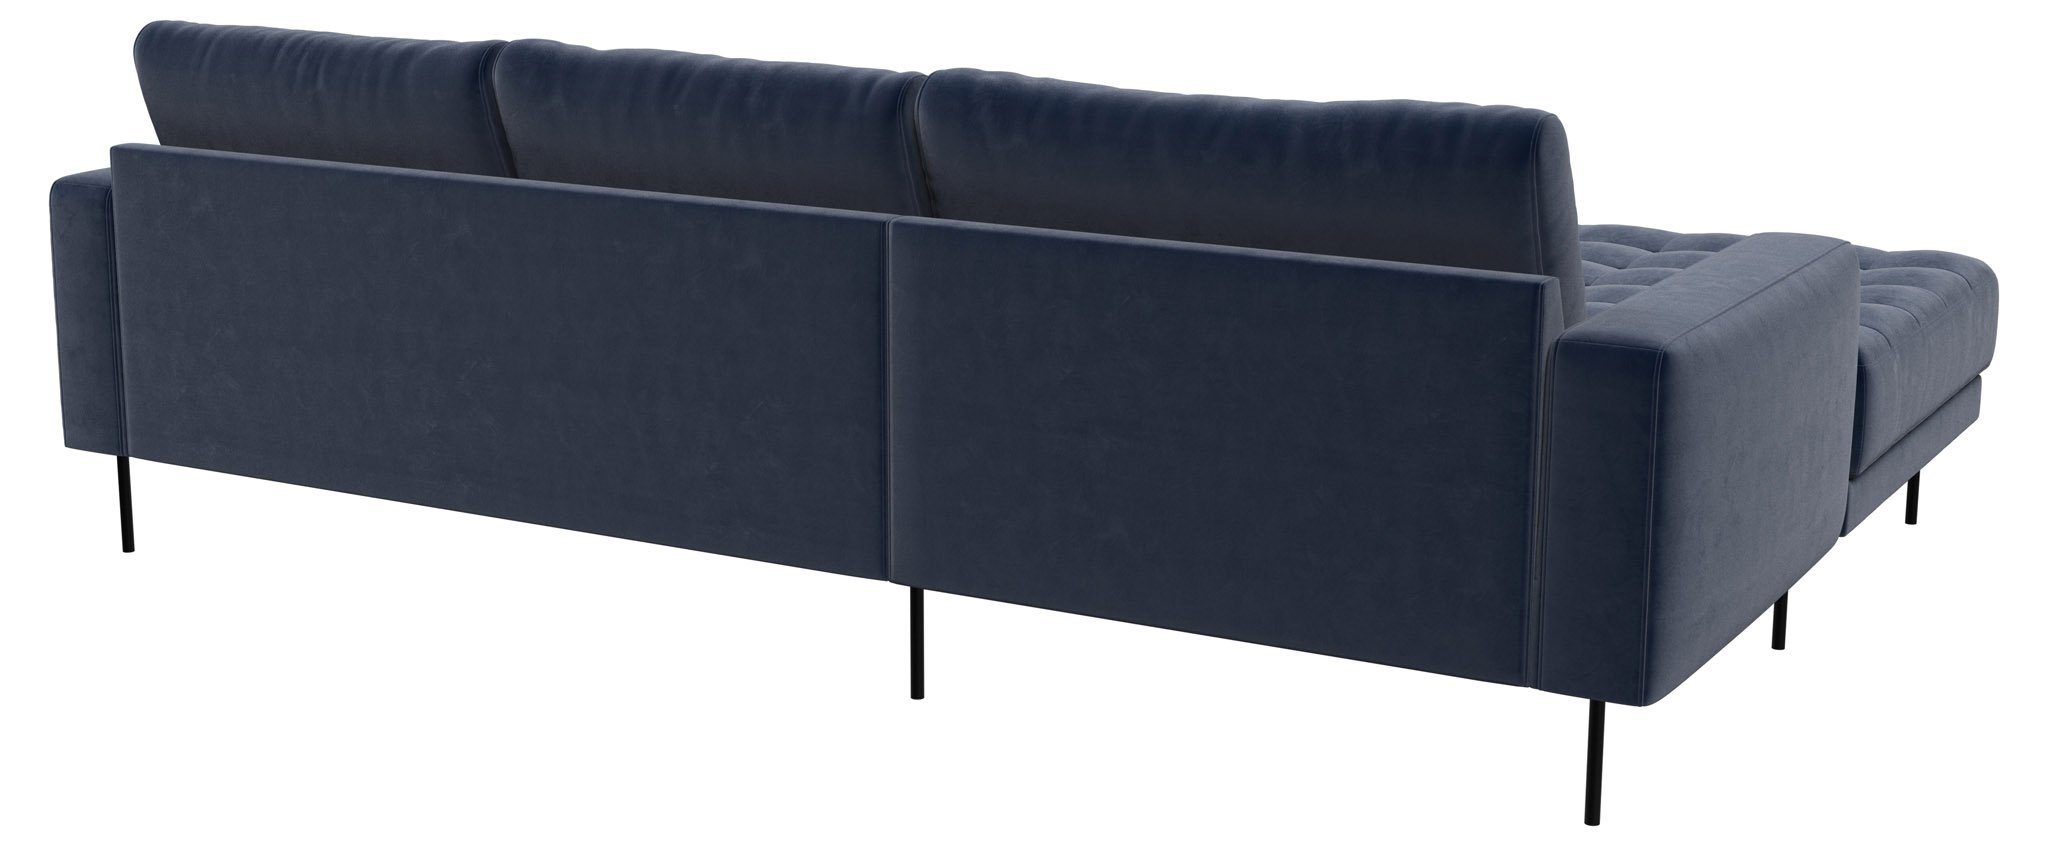 ebuy24 Sofa Rouge 2,5-Sitzer-Sofa mit.//Dunkelblau//Linksgewen Dunkelblau//Linksgewendet